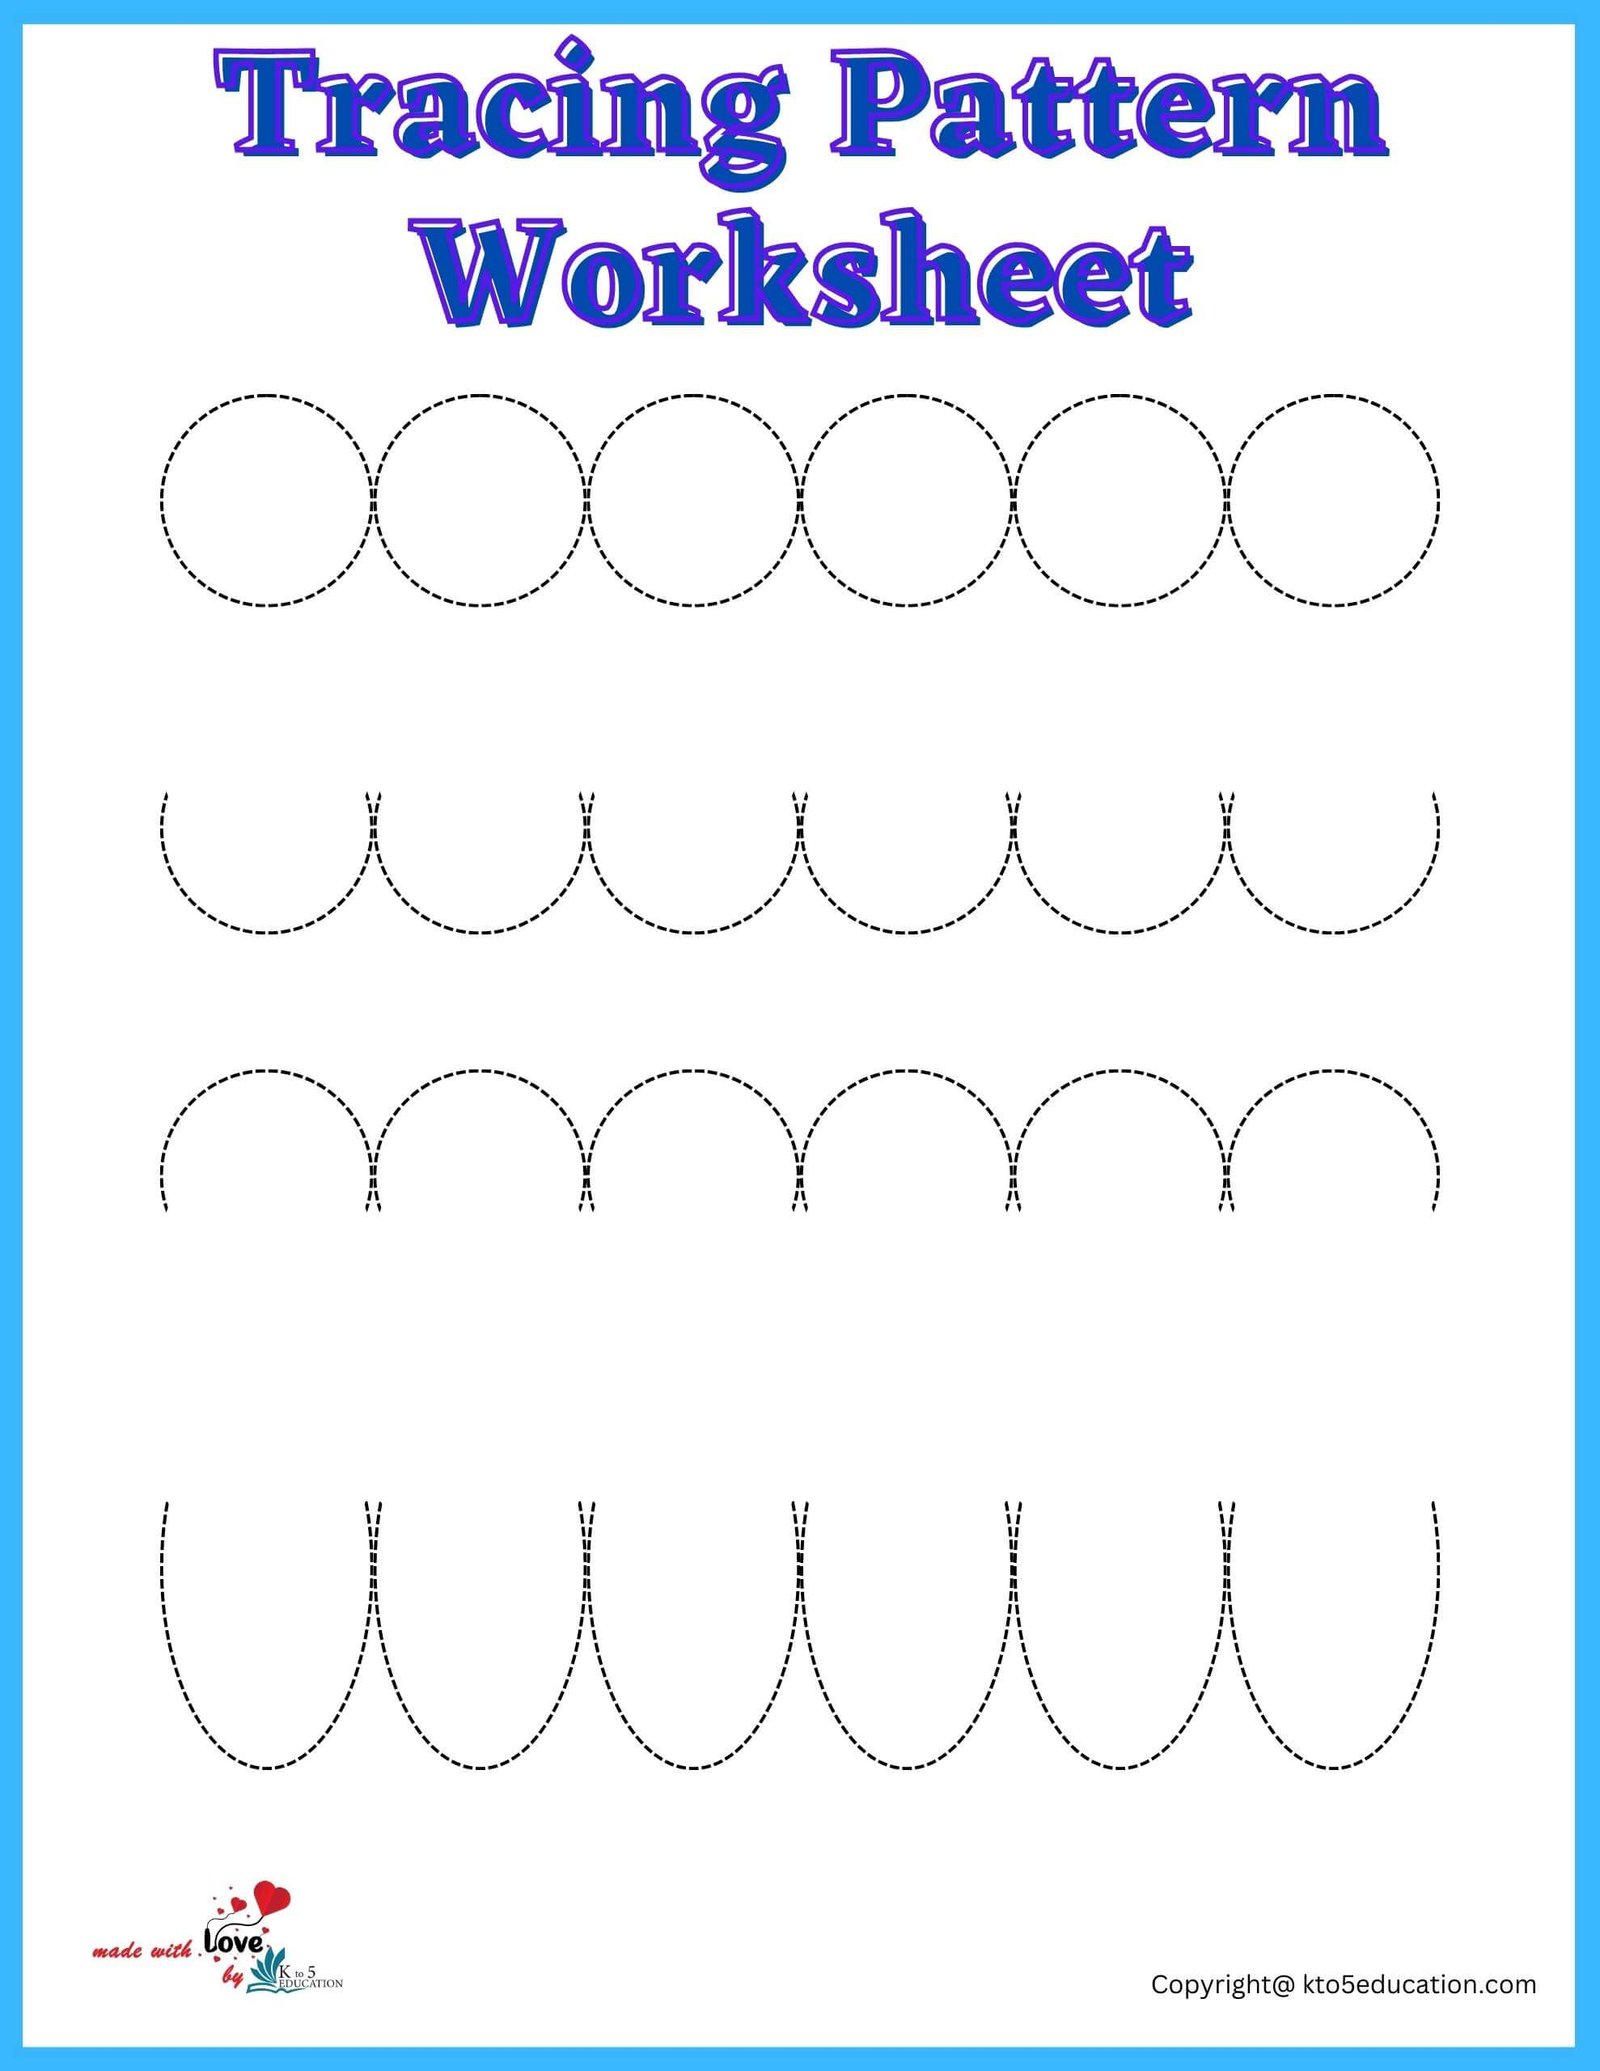 Tracing Pattern Worksheet